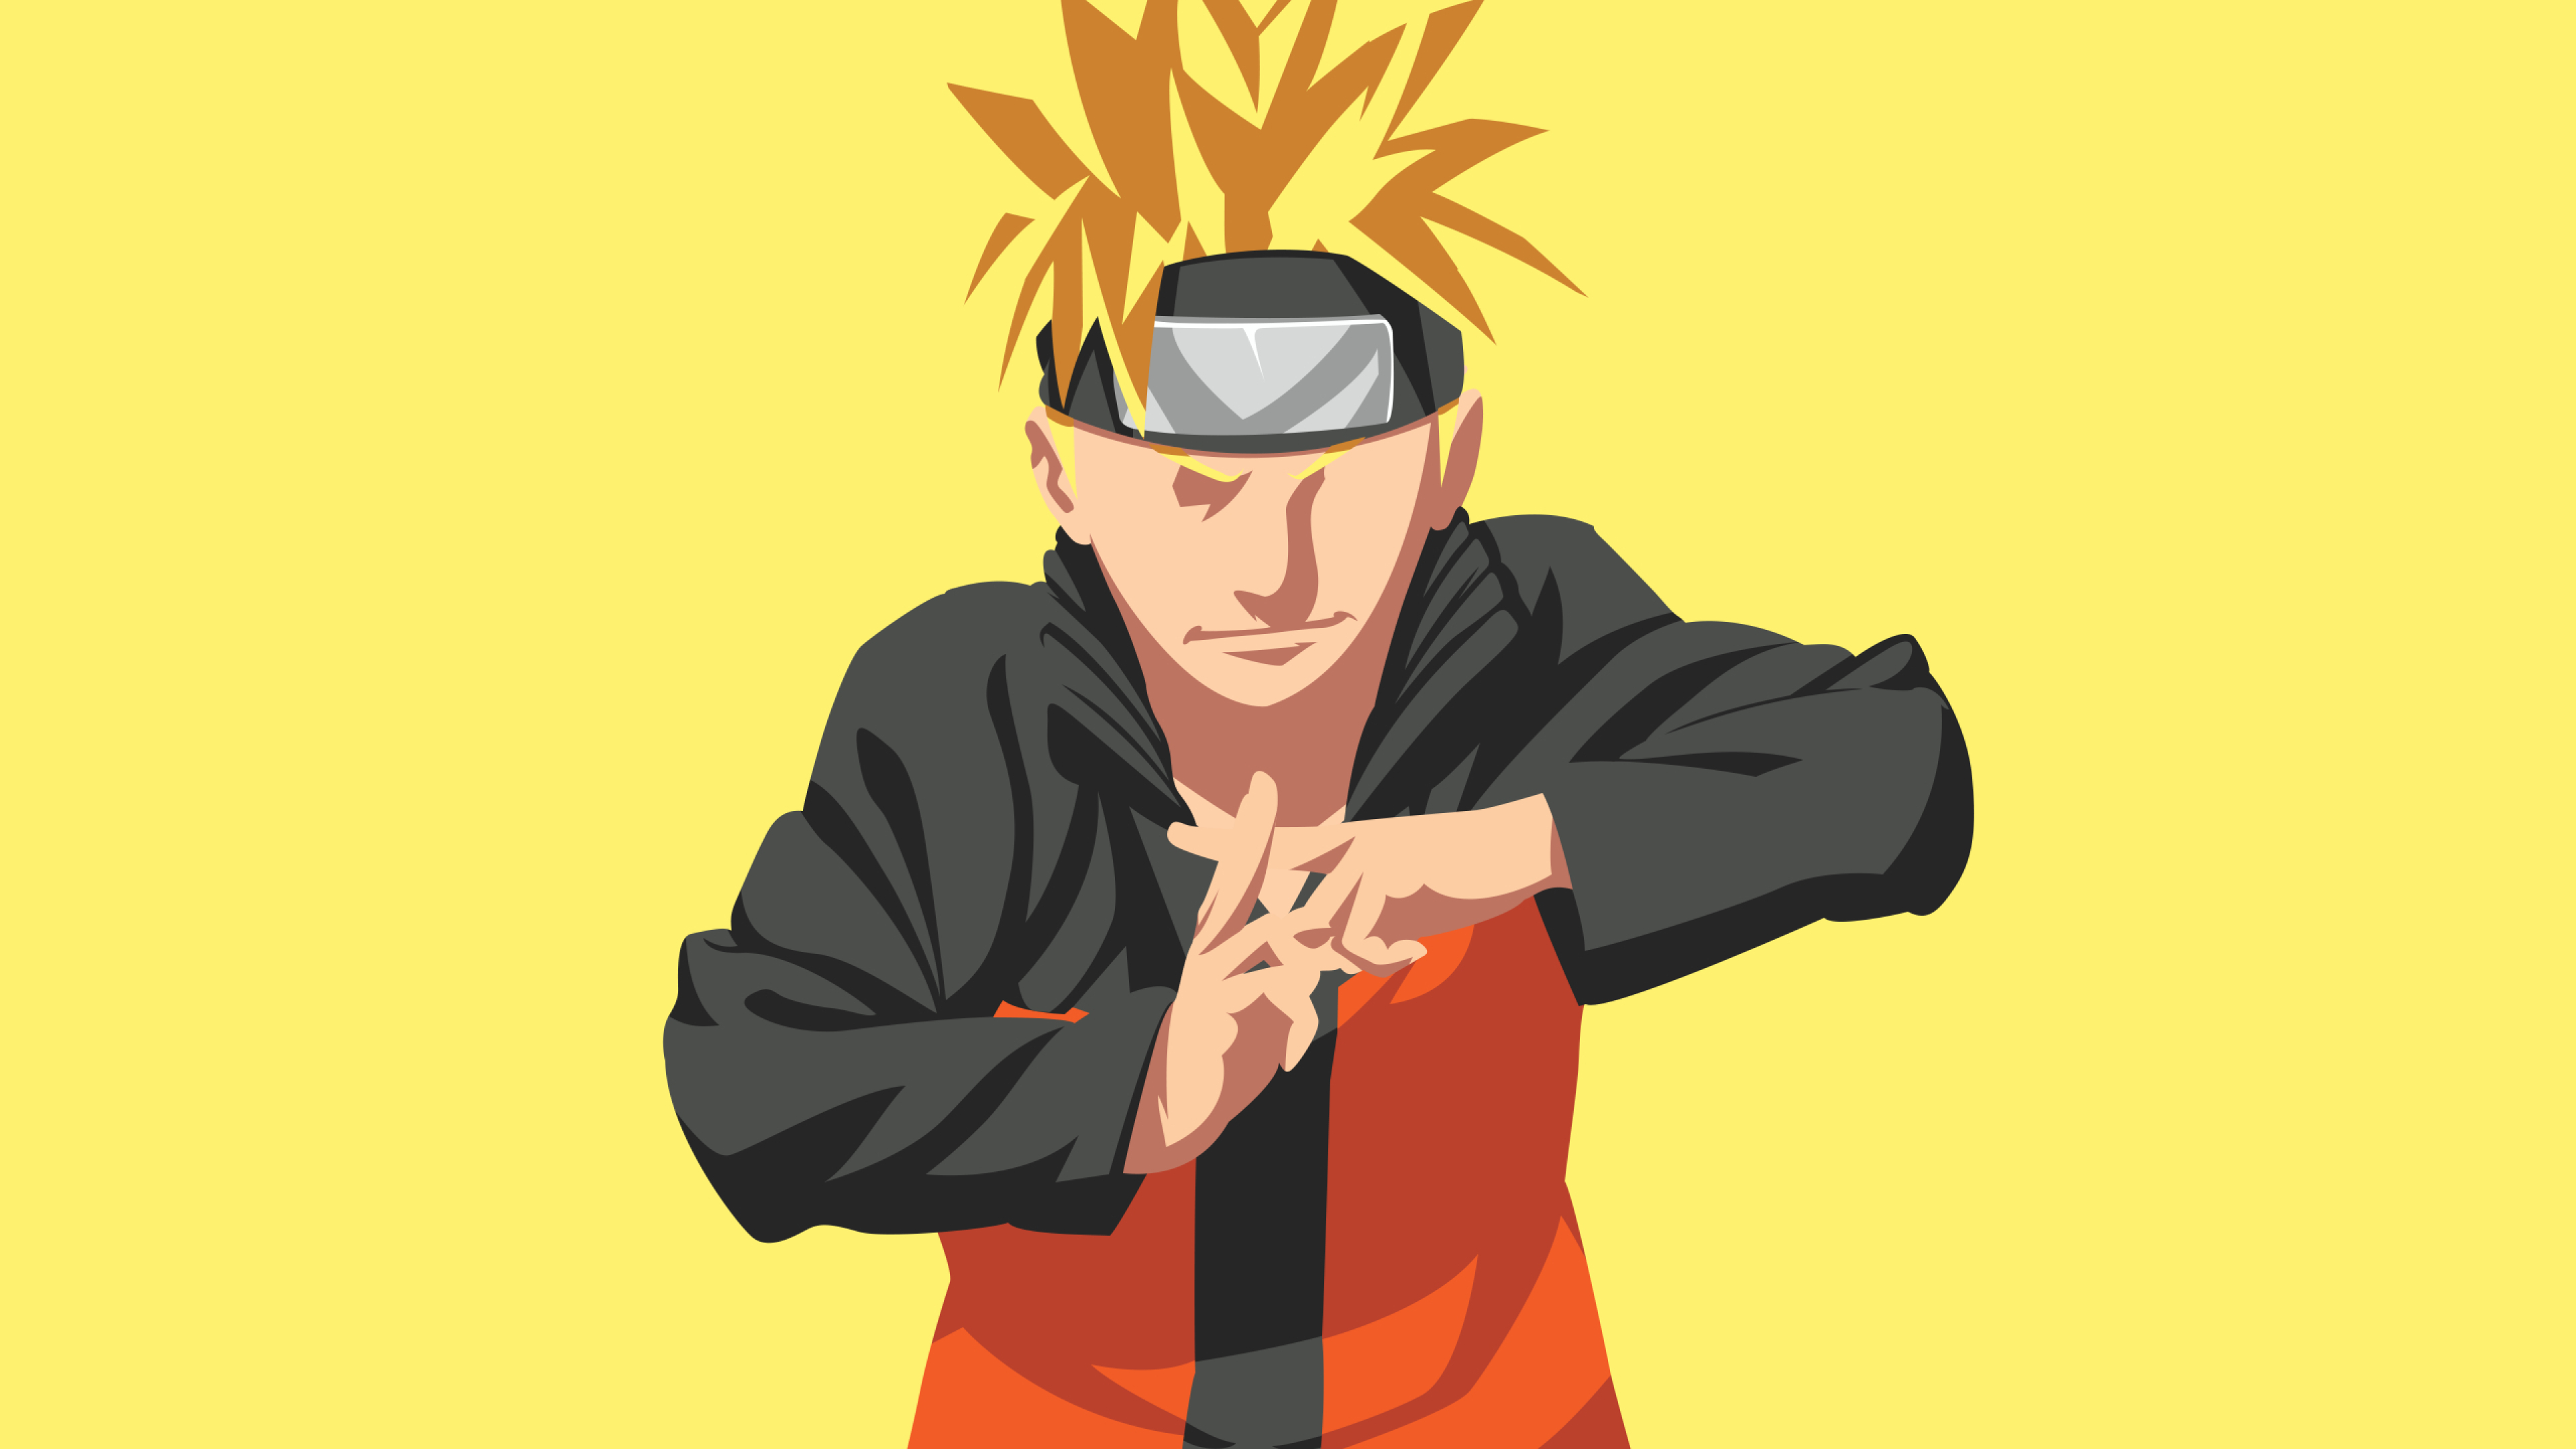 3840x2160 Naruto Uzumaki Minimal Art 4k Wallpaper Hd Anime 4k Wallpapers Images Photos And Background Wallpapers Den